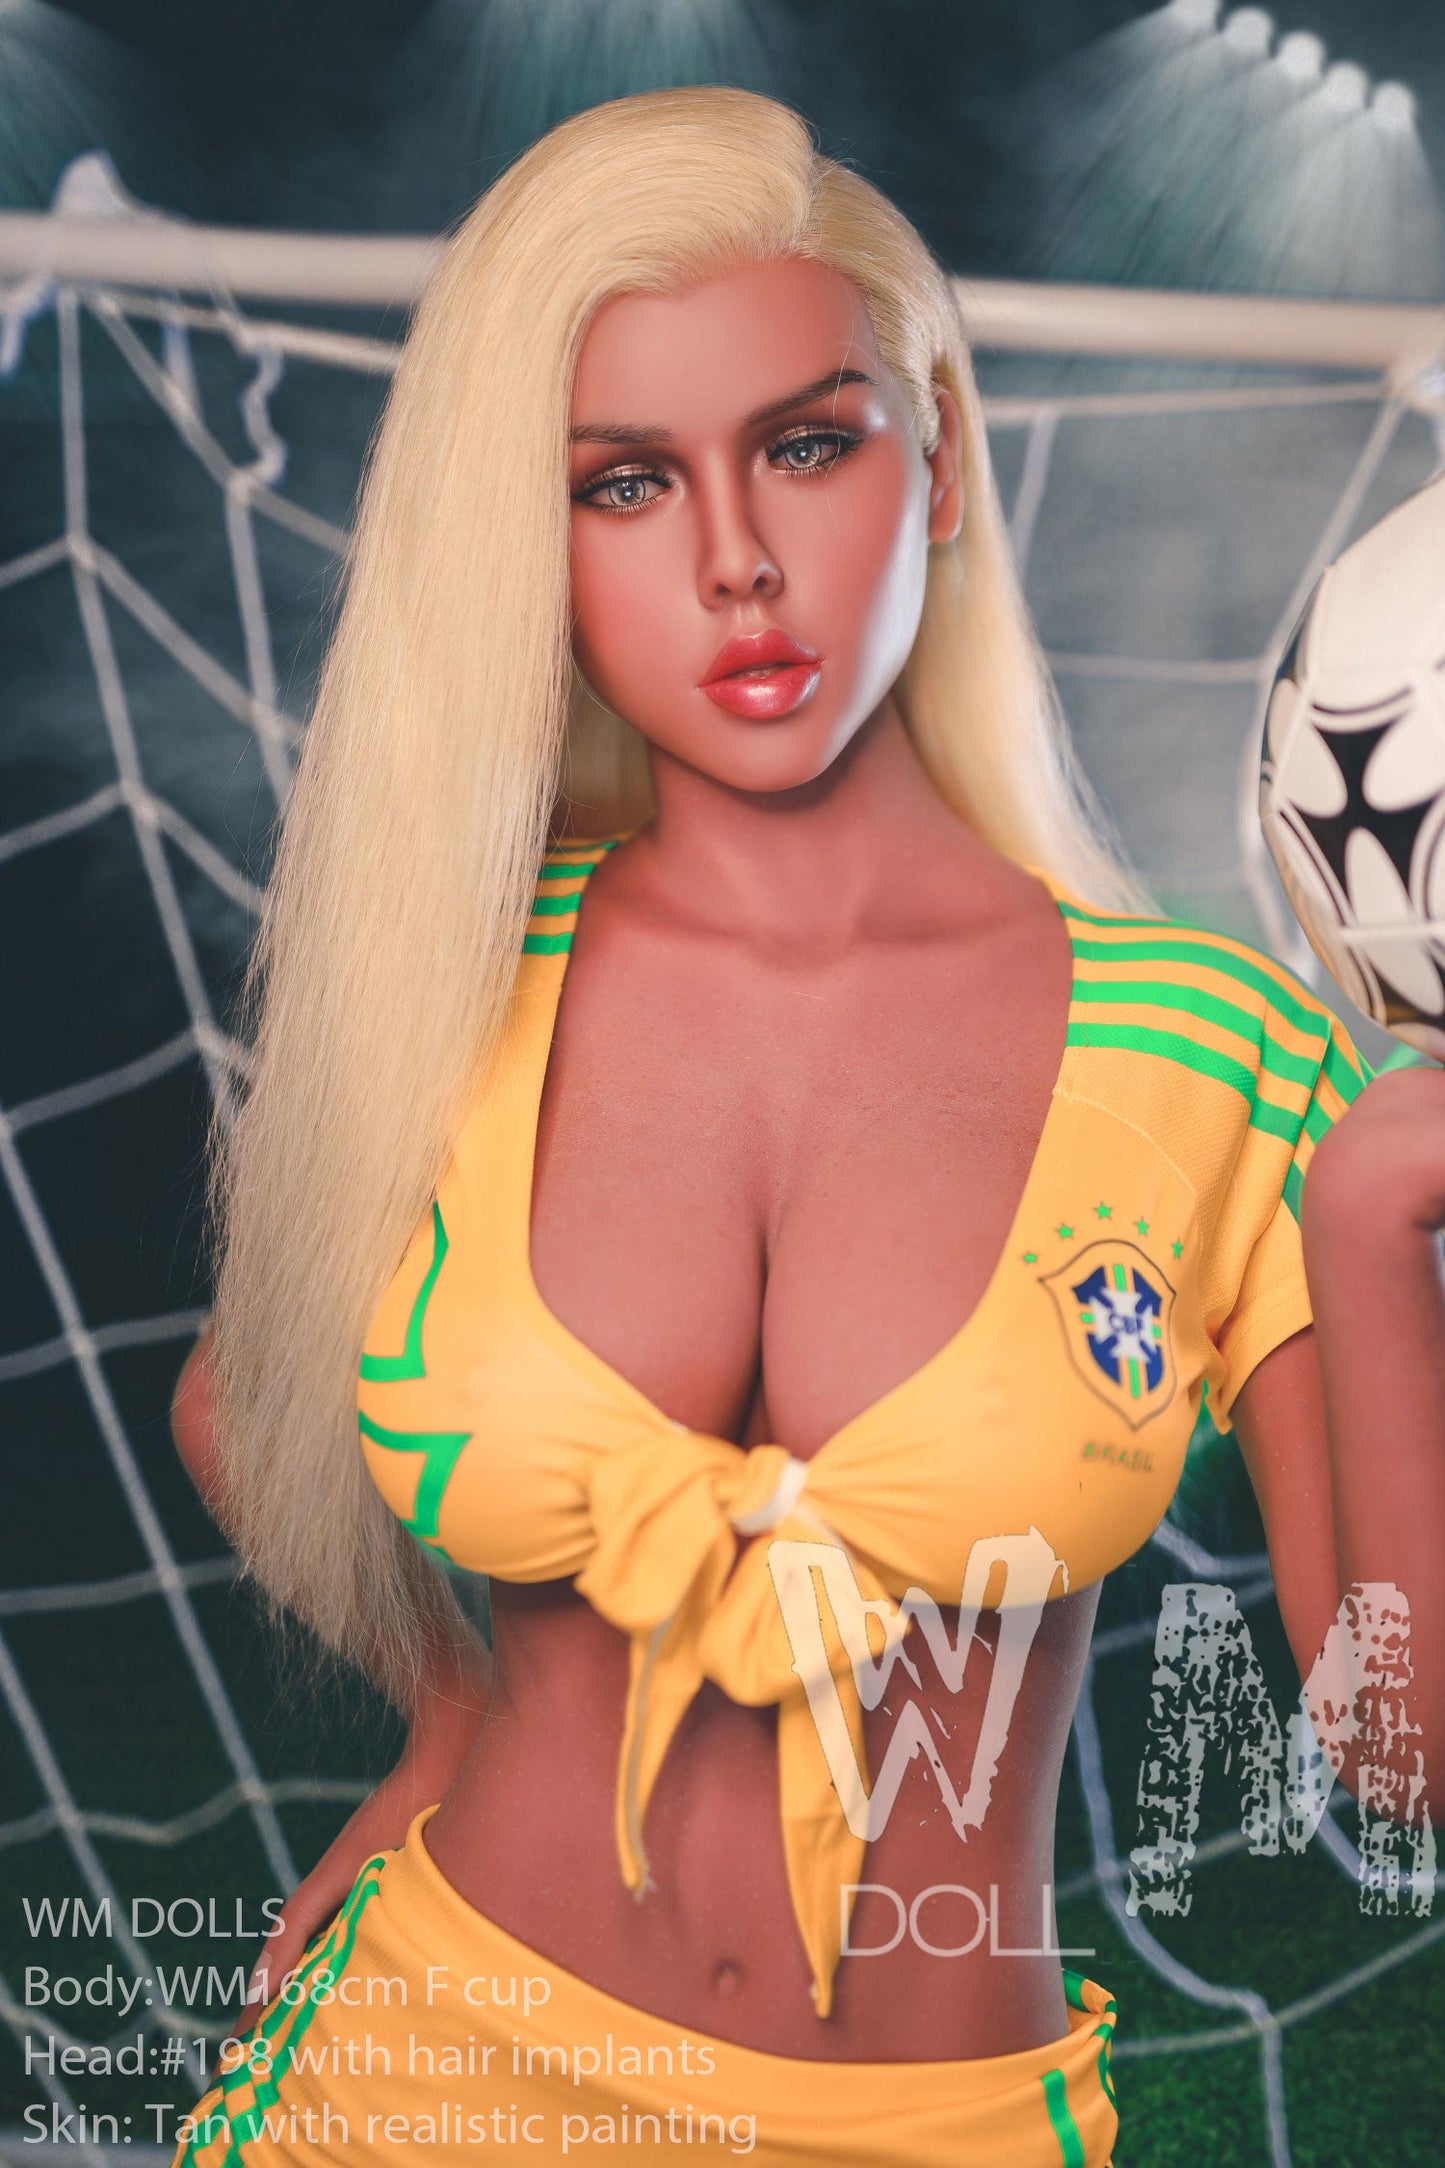 Azktonia: WM Sex Doll, 168cm, F-Cup, Teen Football Player, Head 198